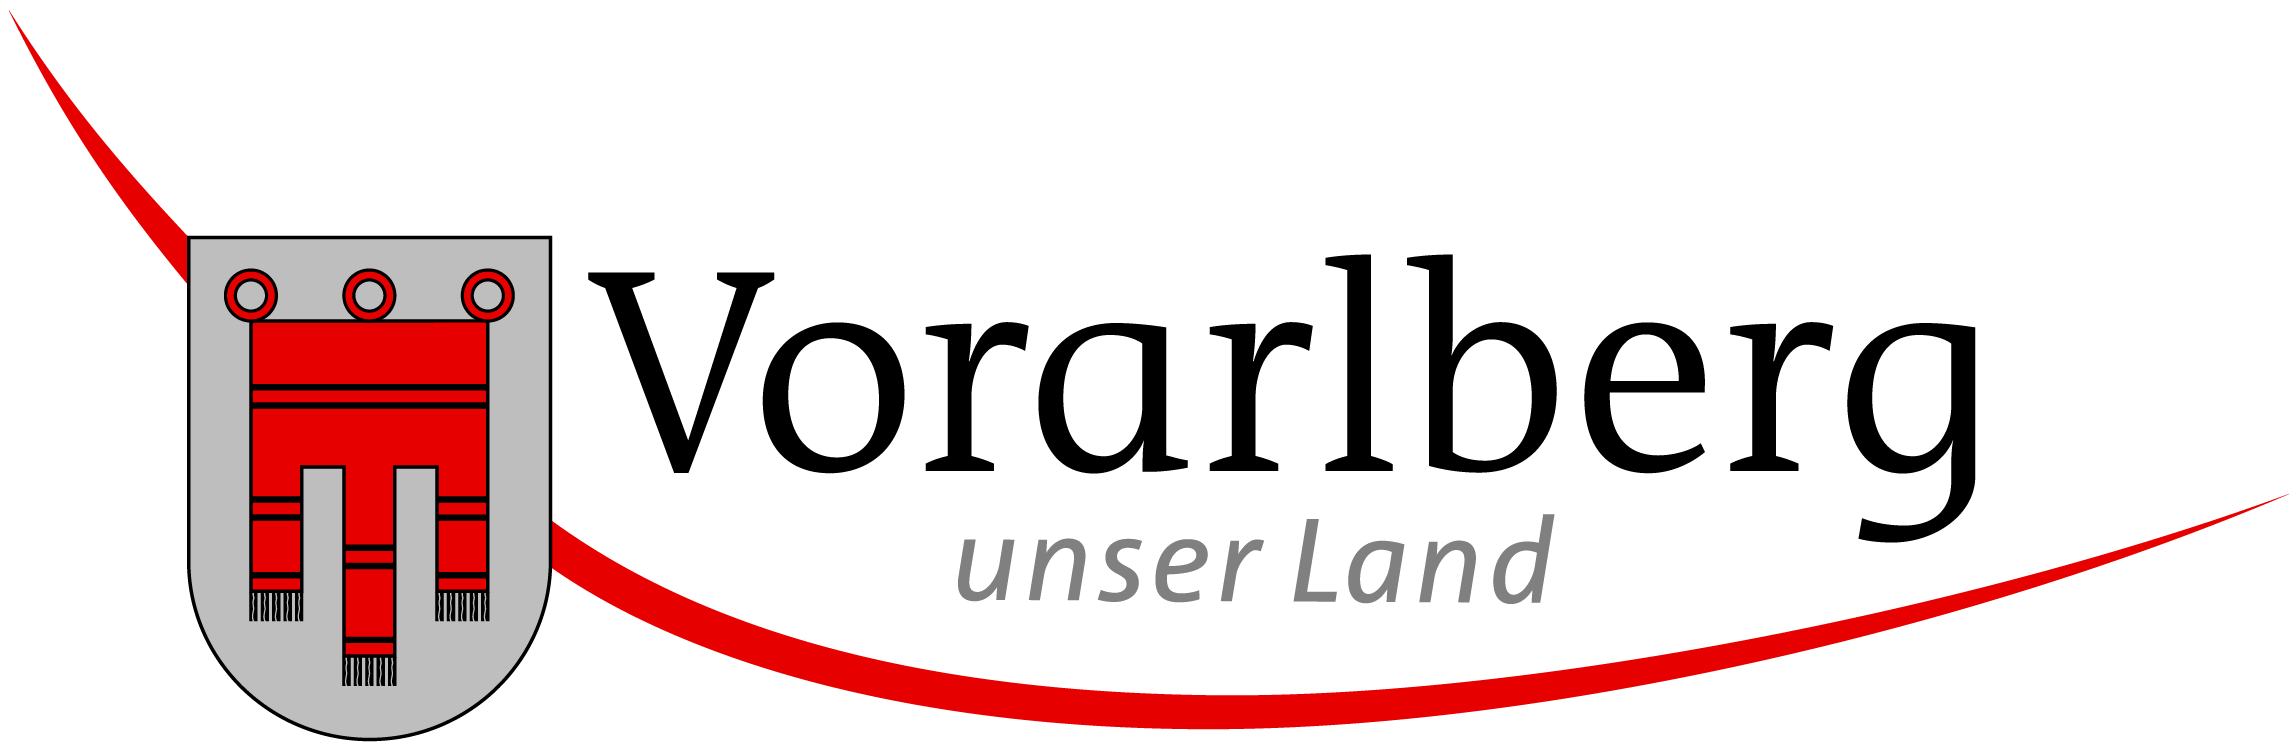 State of Vorarlberg